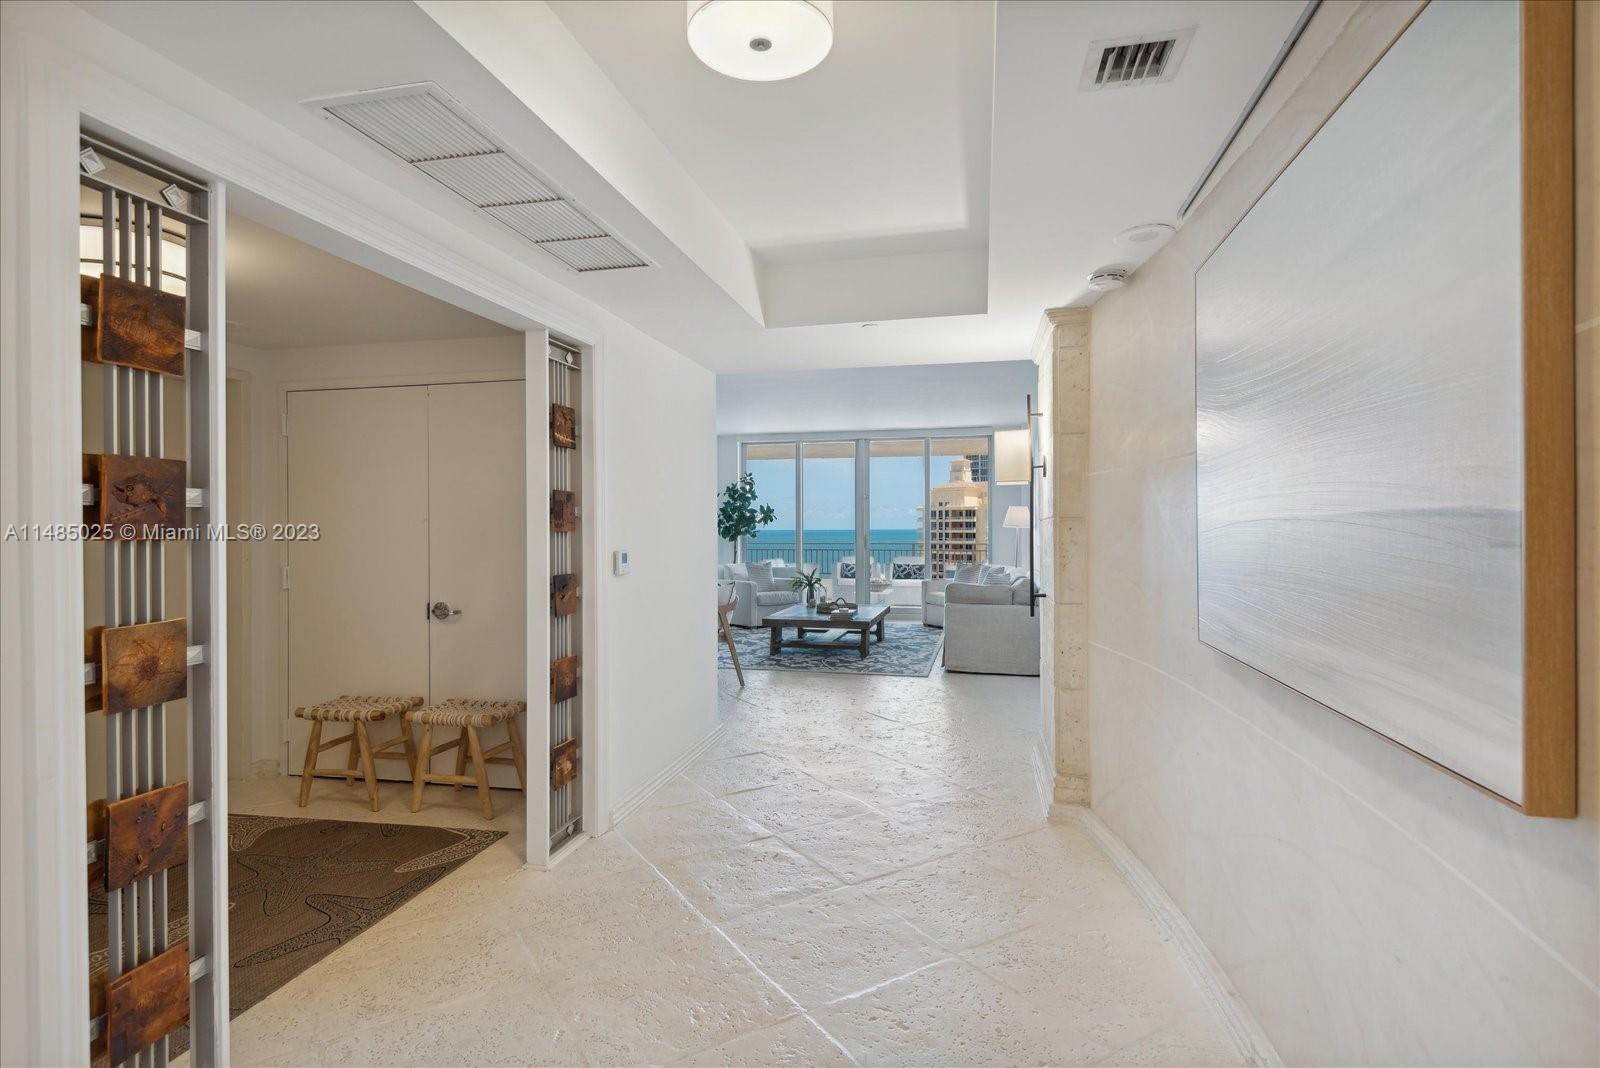 Rental Property at 791 Crandon Blvd 1501, Key Biscayne, Miami-Dade County, Florida - Bedrooms: 3 
Bathrooms: 3  - $20,000 MO.